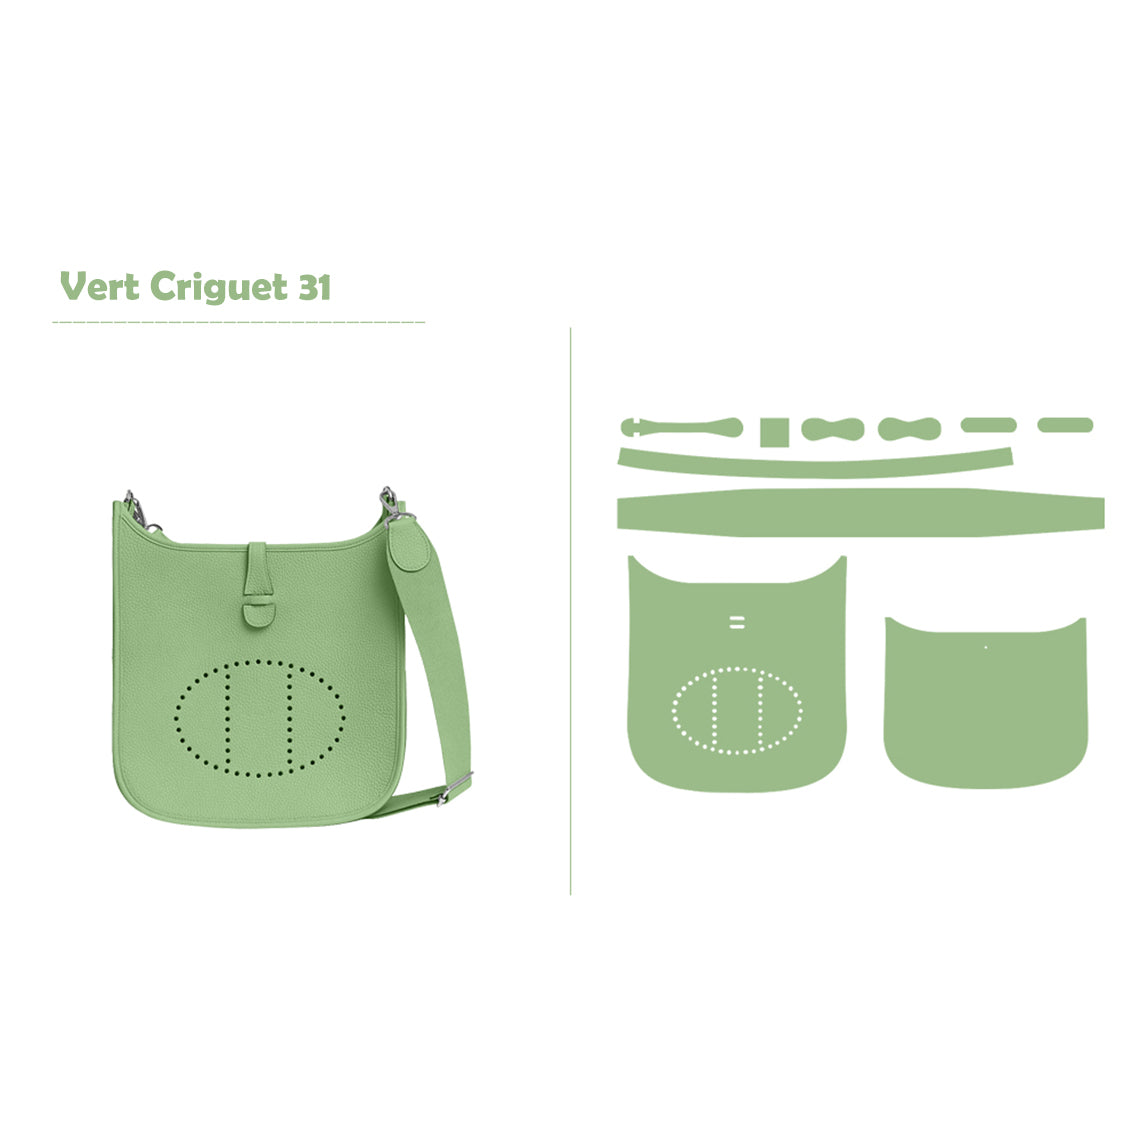 POPSEWING® Full Grain Leather Inspired Evelyn 29 Bag DIY Kits